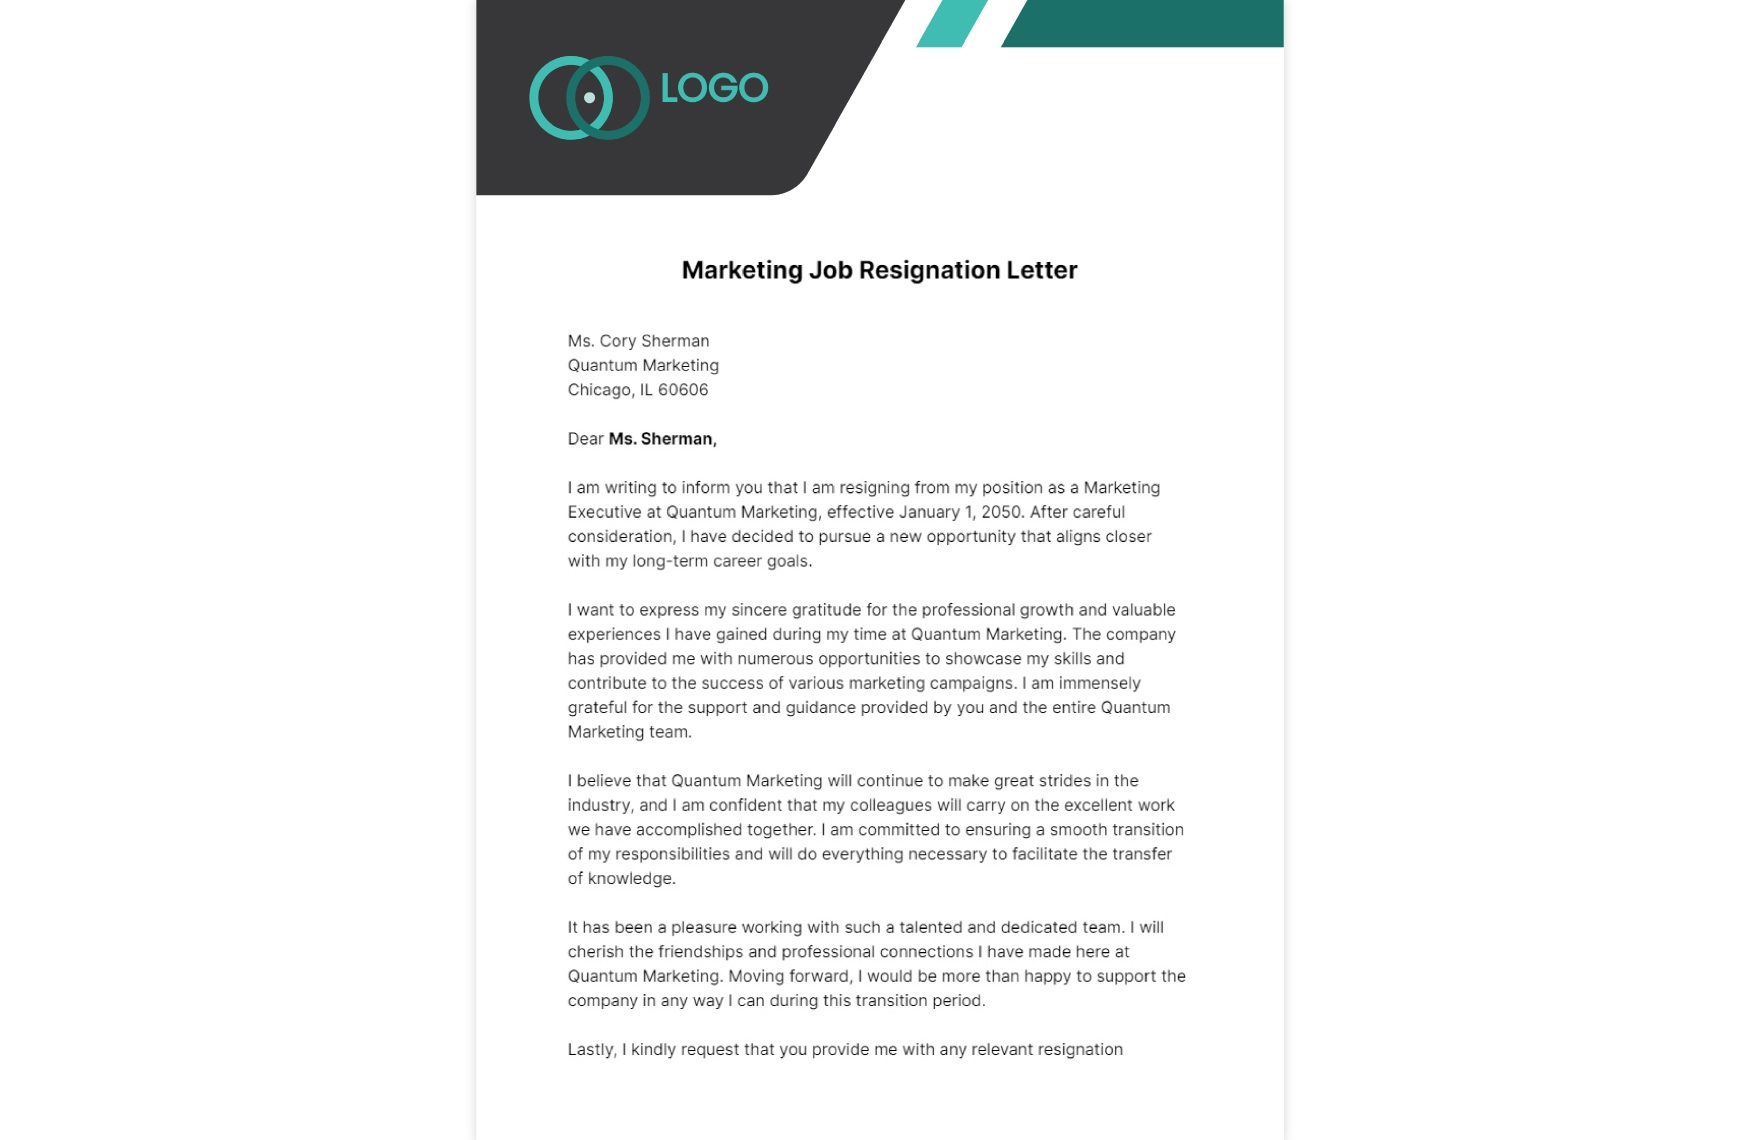 Marketing Job Resignation Letter  Template